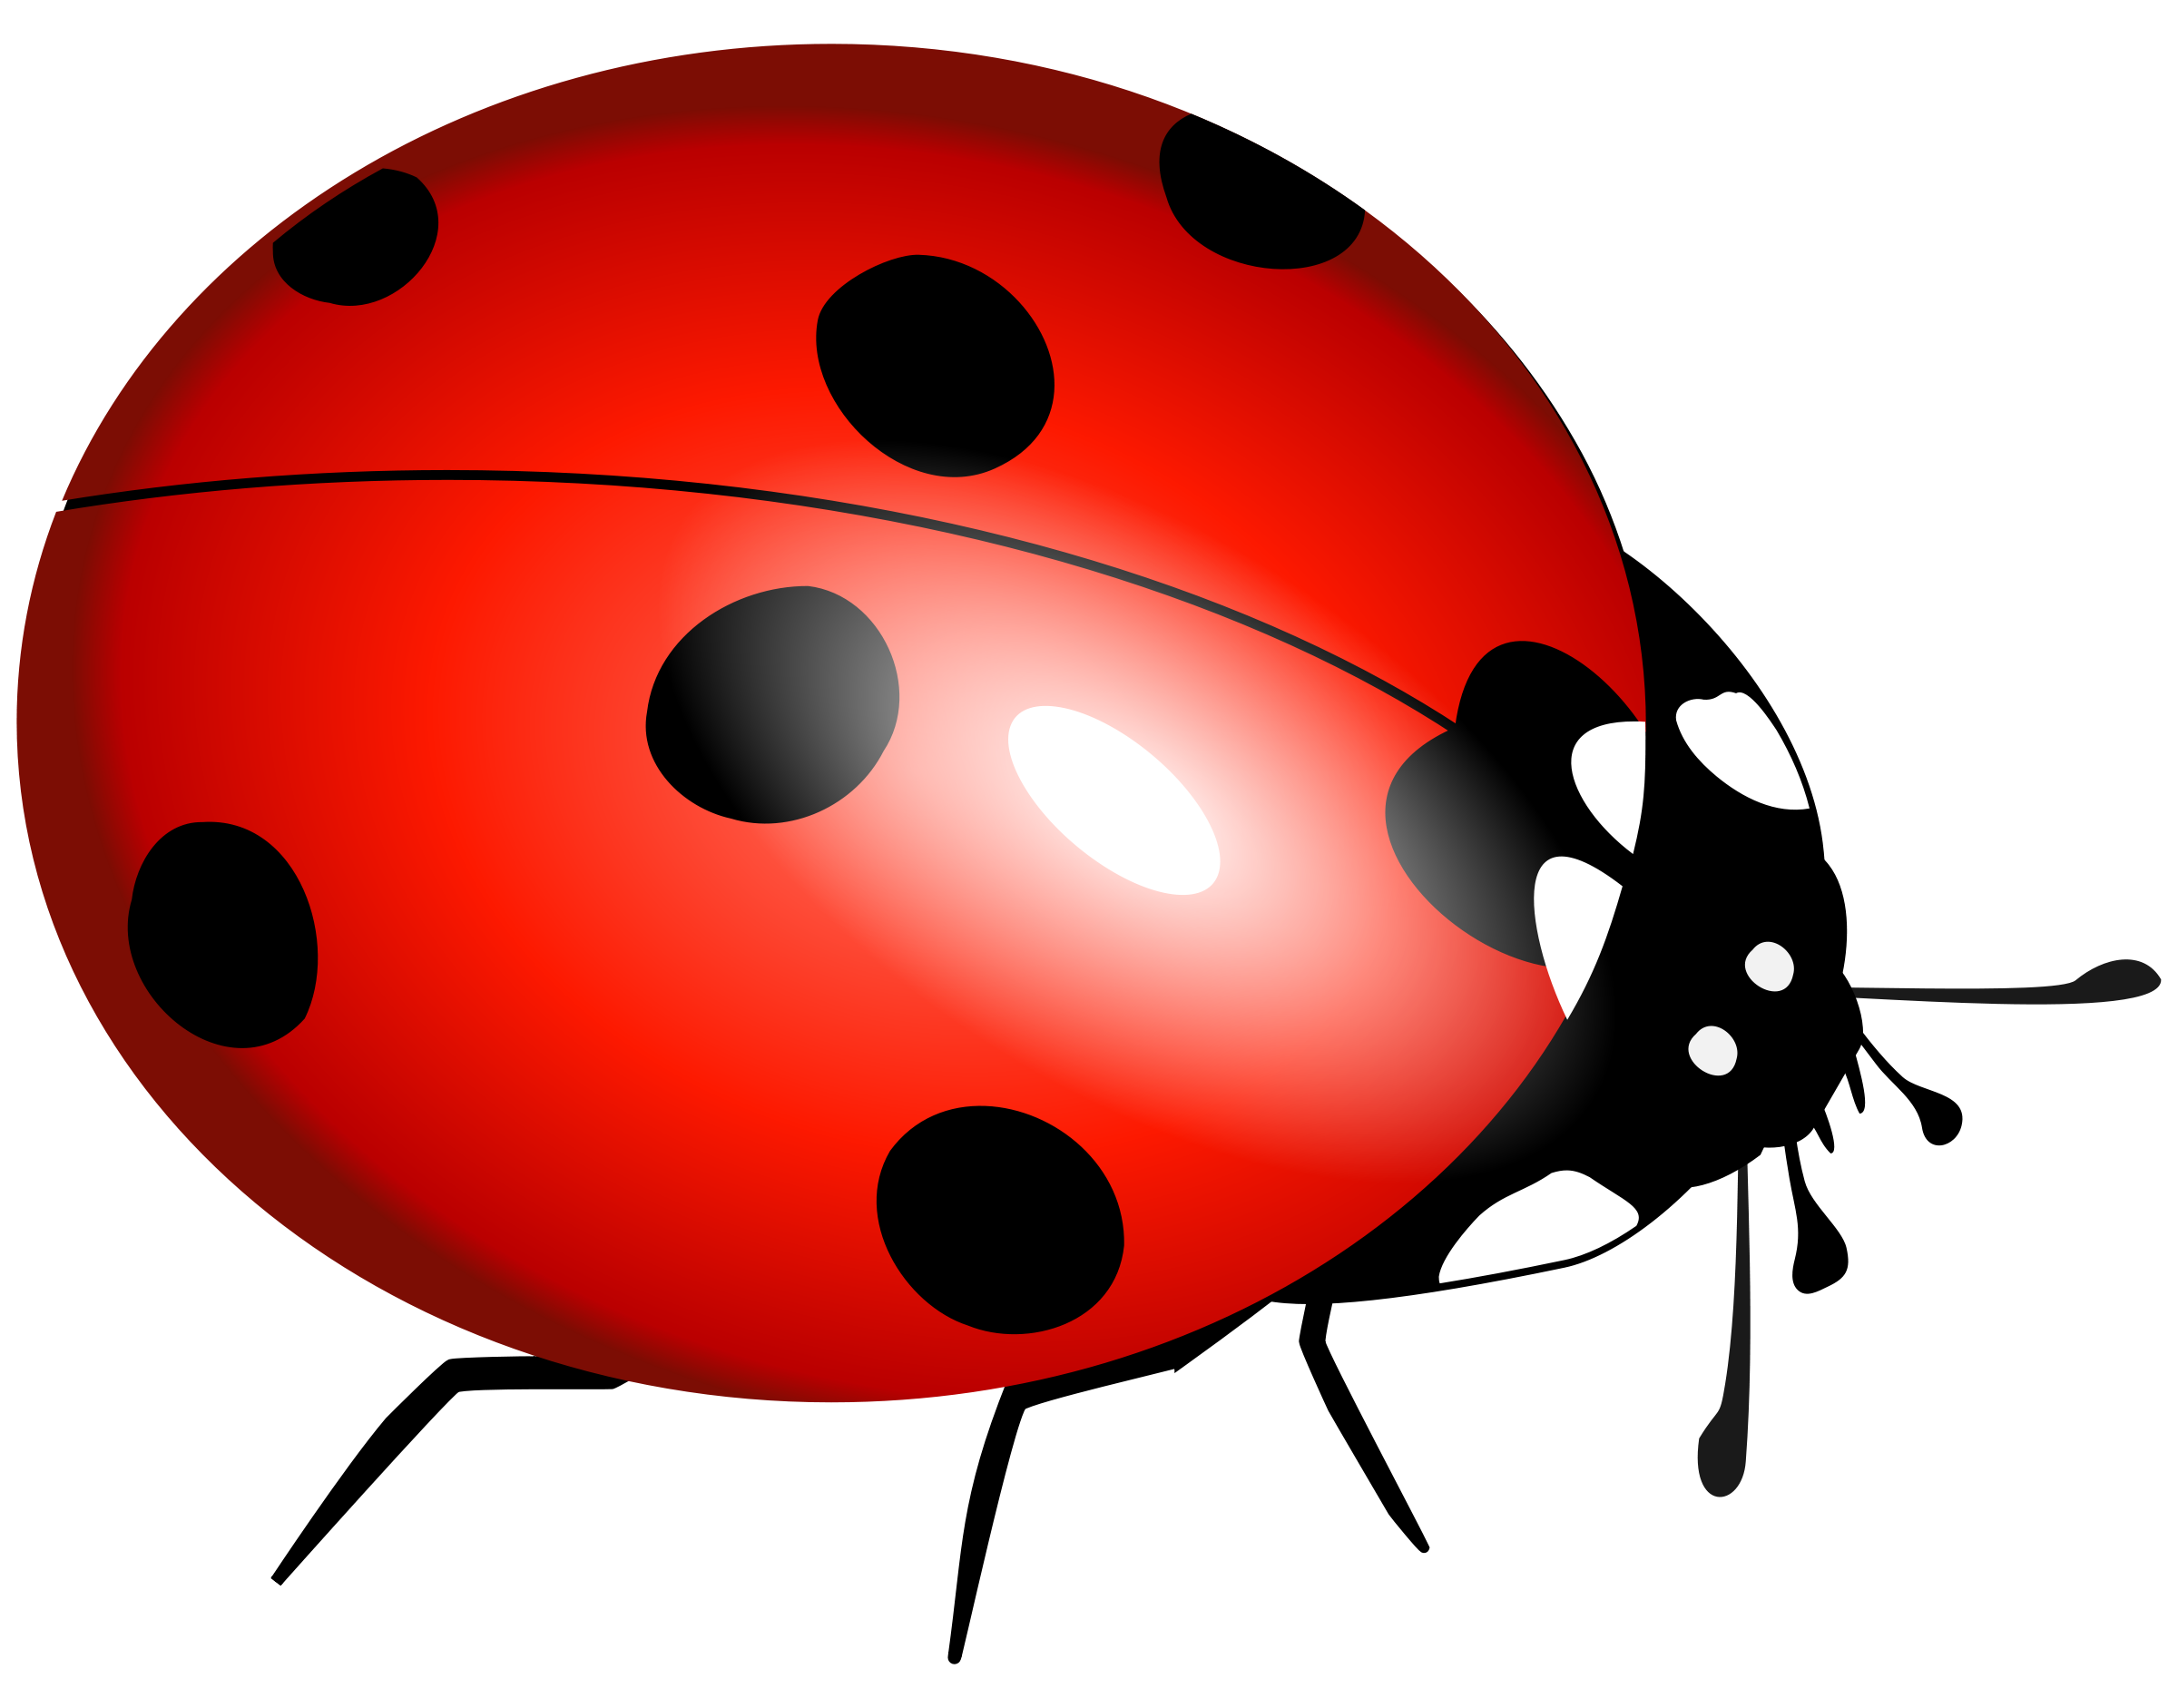 Download Png Image  Ladybug Png Image